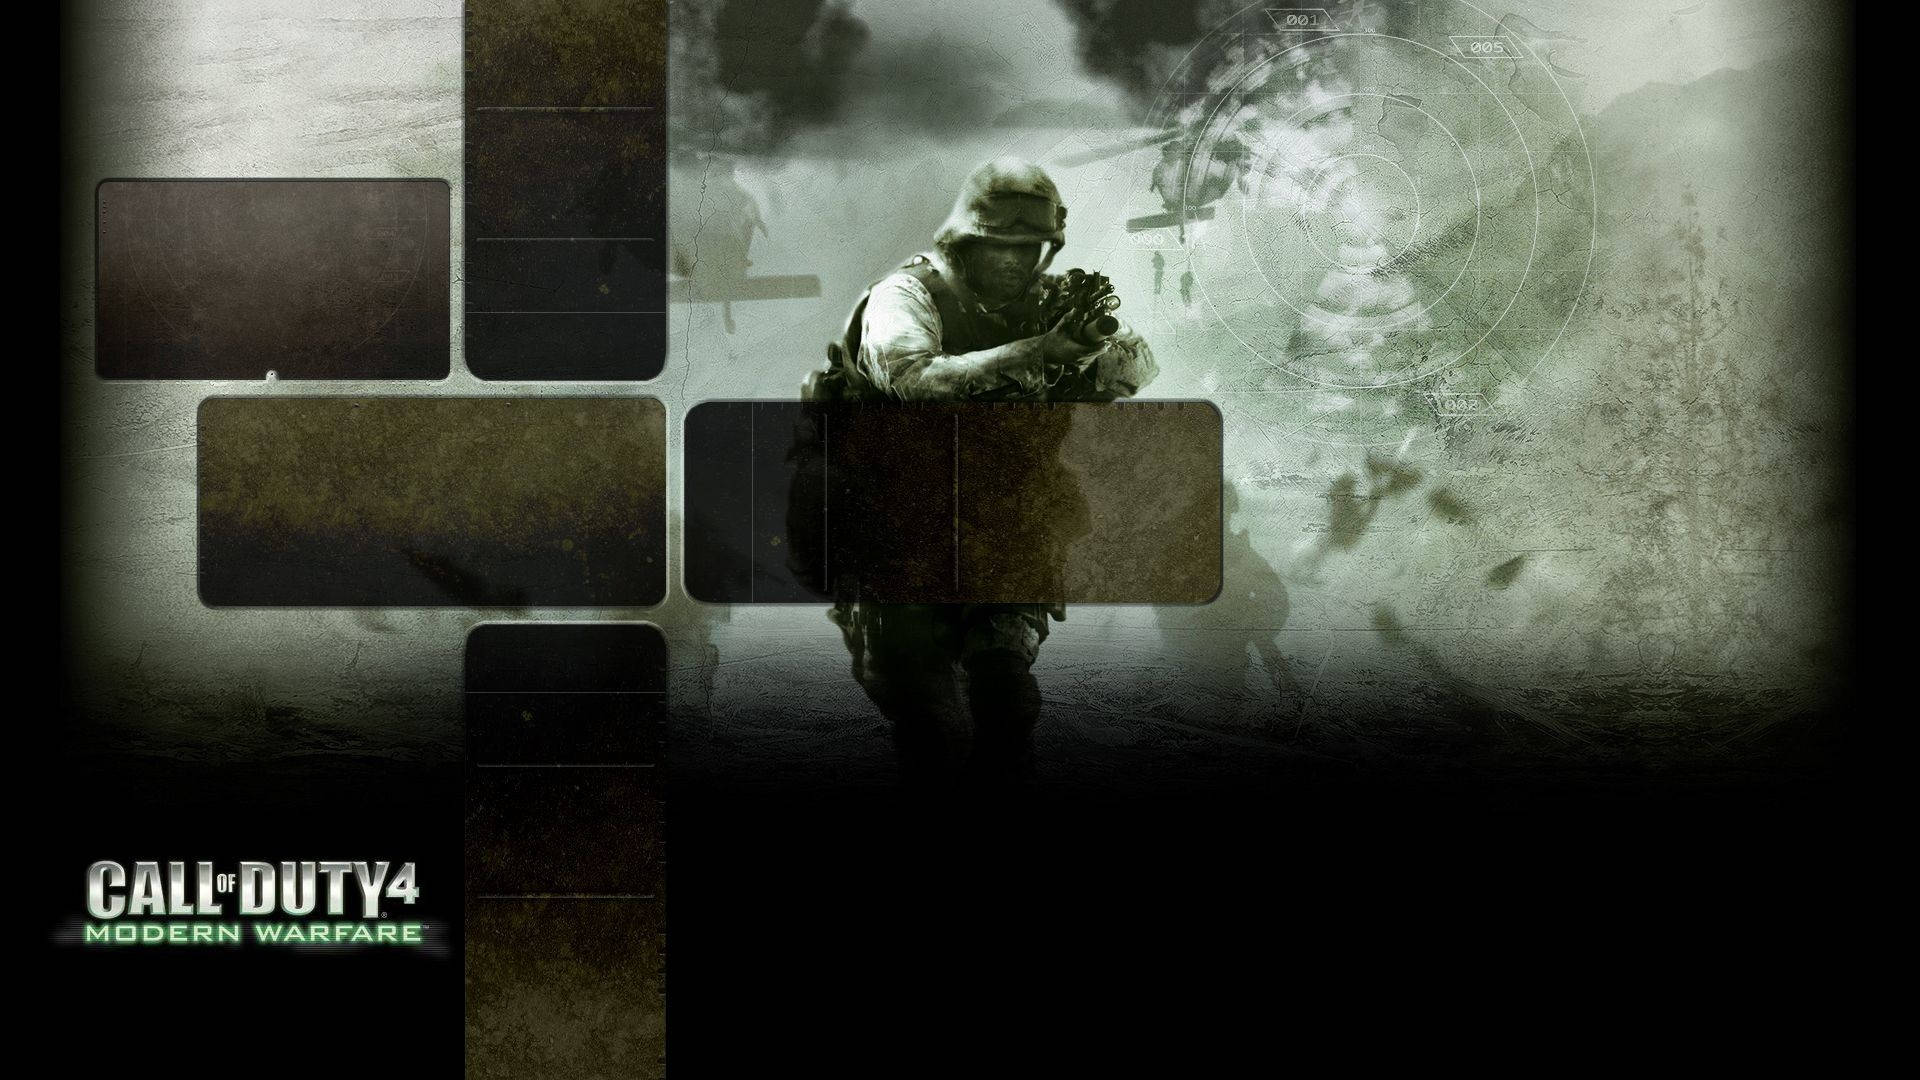 Ps3call Of Duty 4 Wallpaper